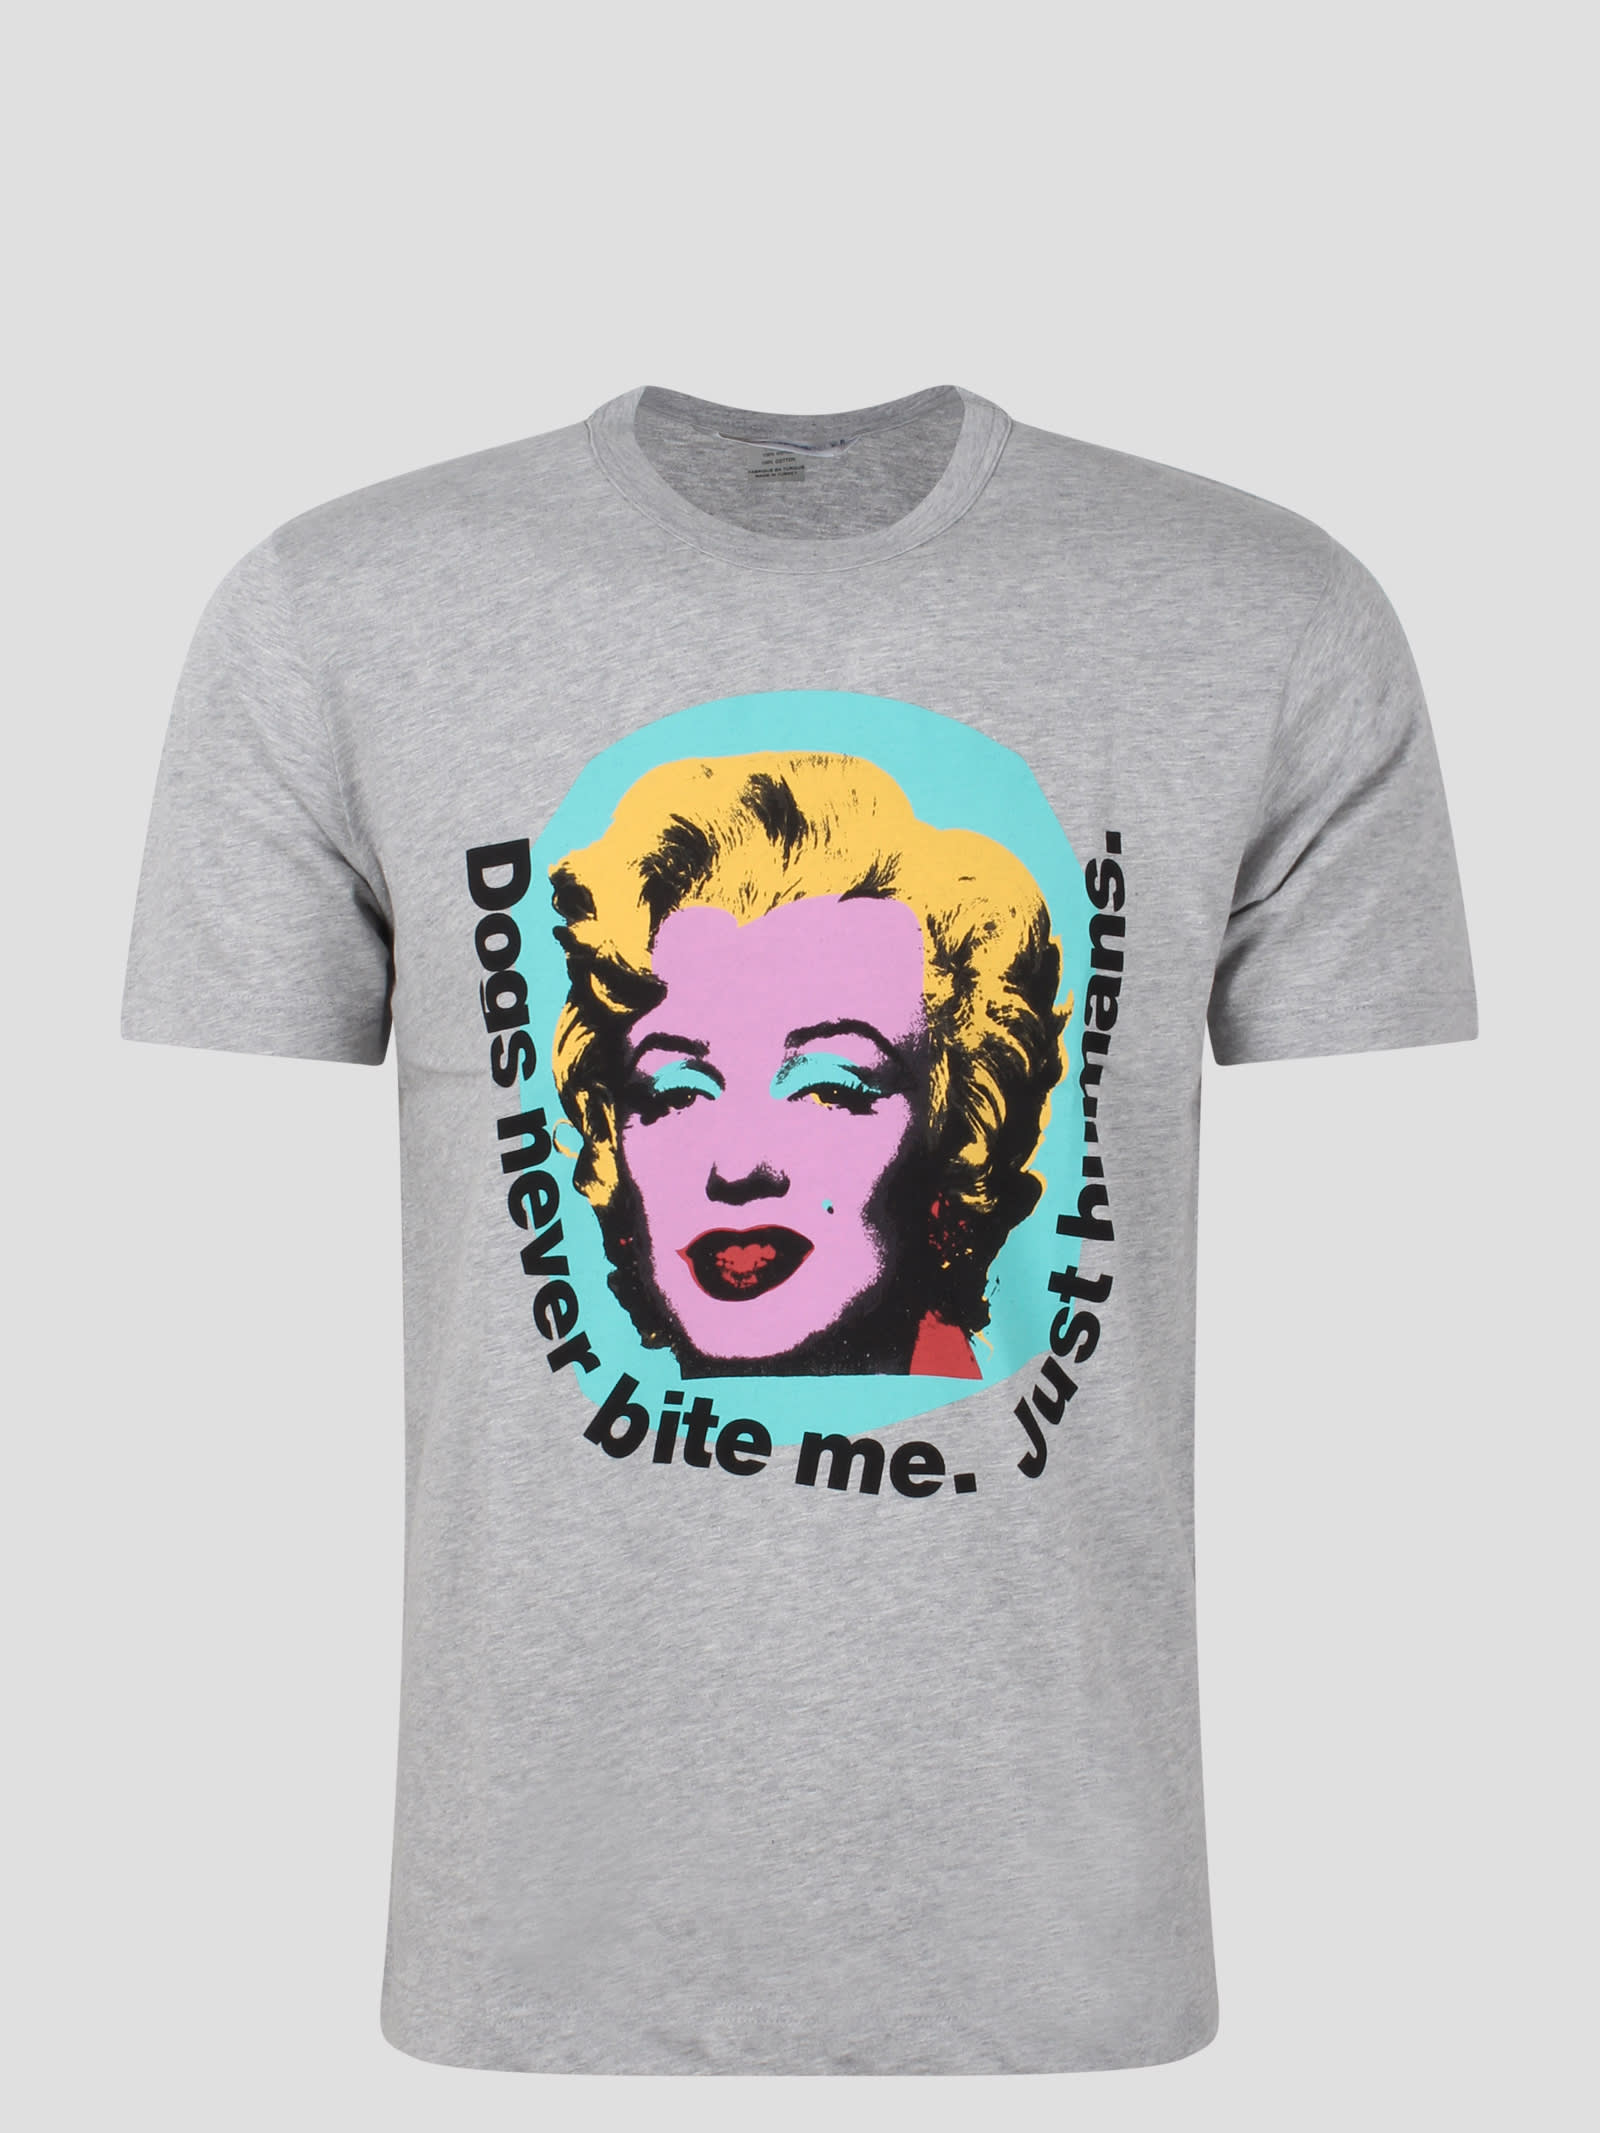 Andy Warhol T-shirt